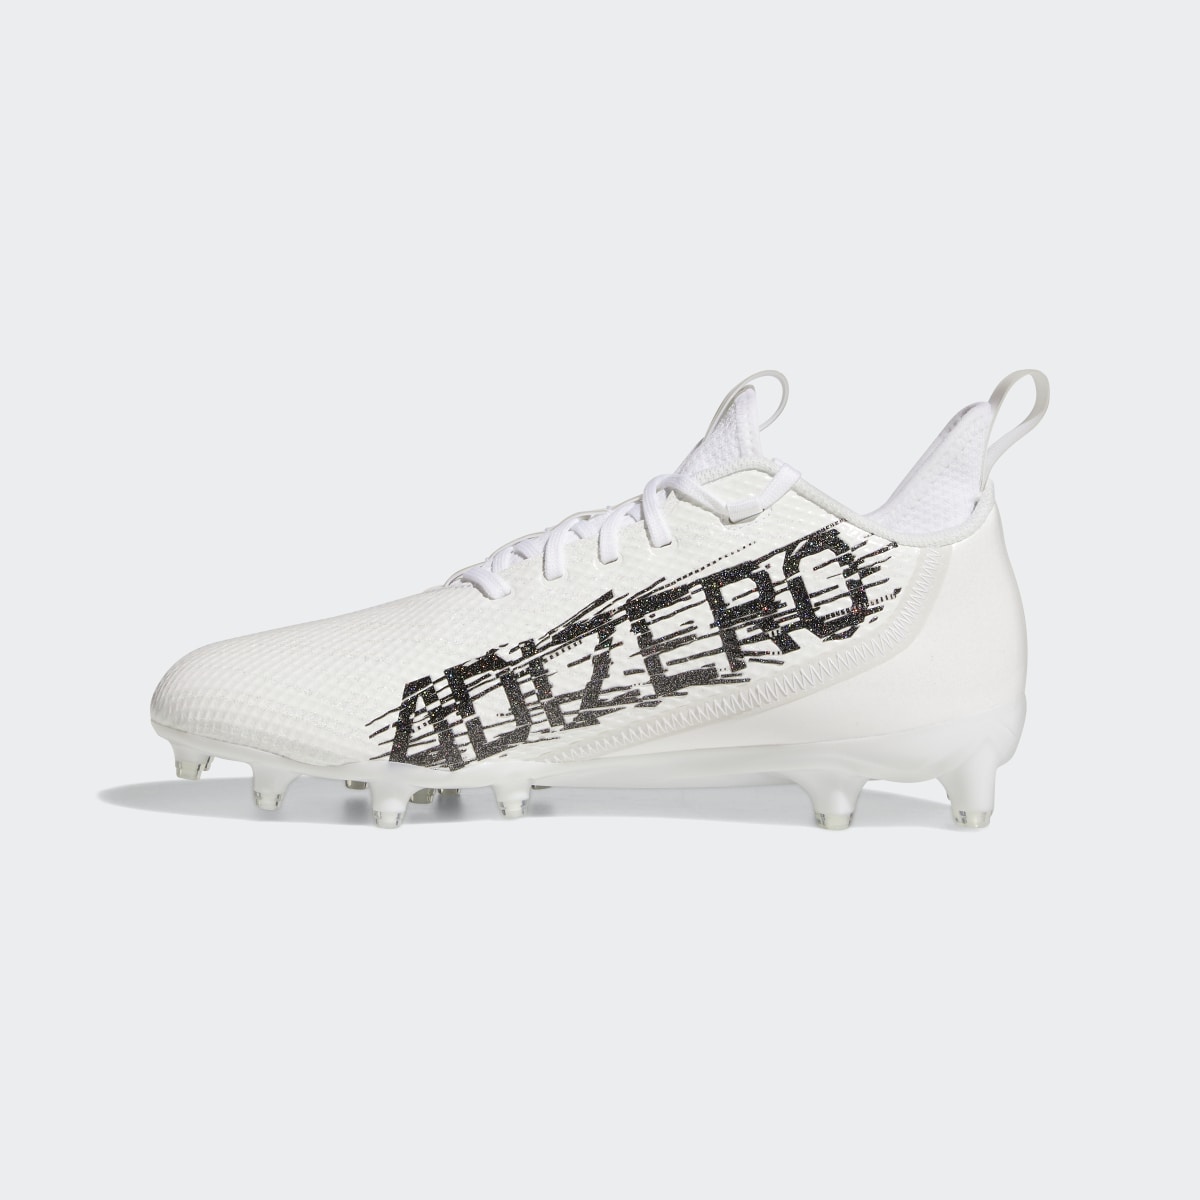 Adidas Adizero Scorch Cleats. 7